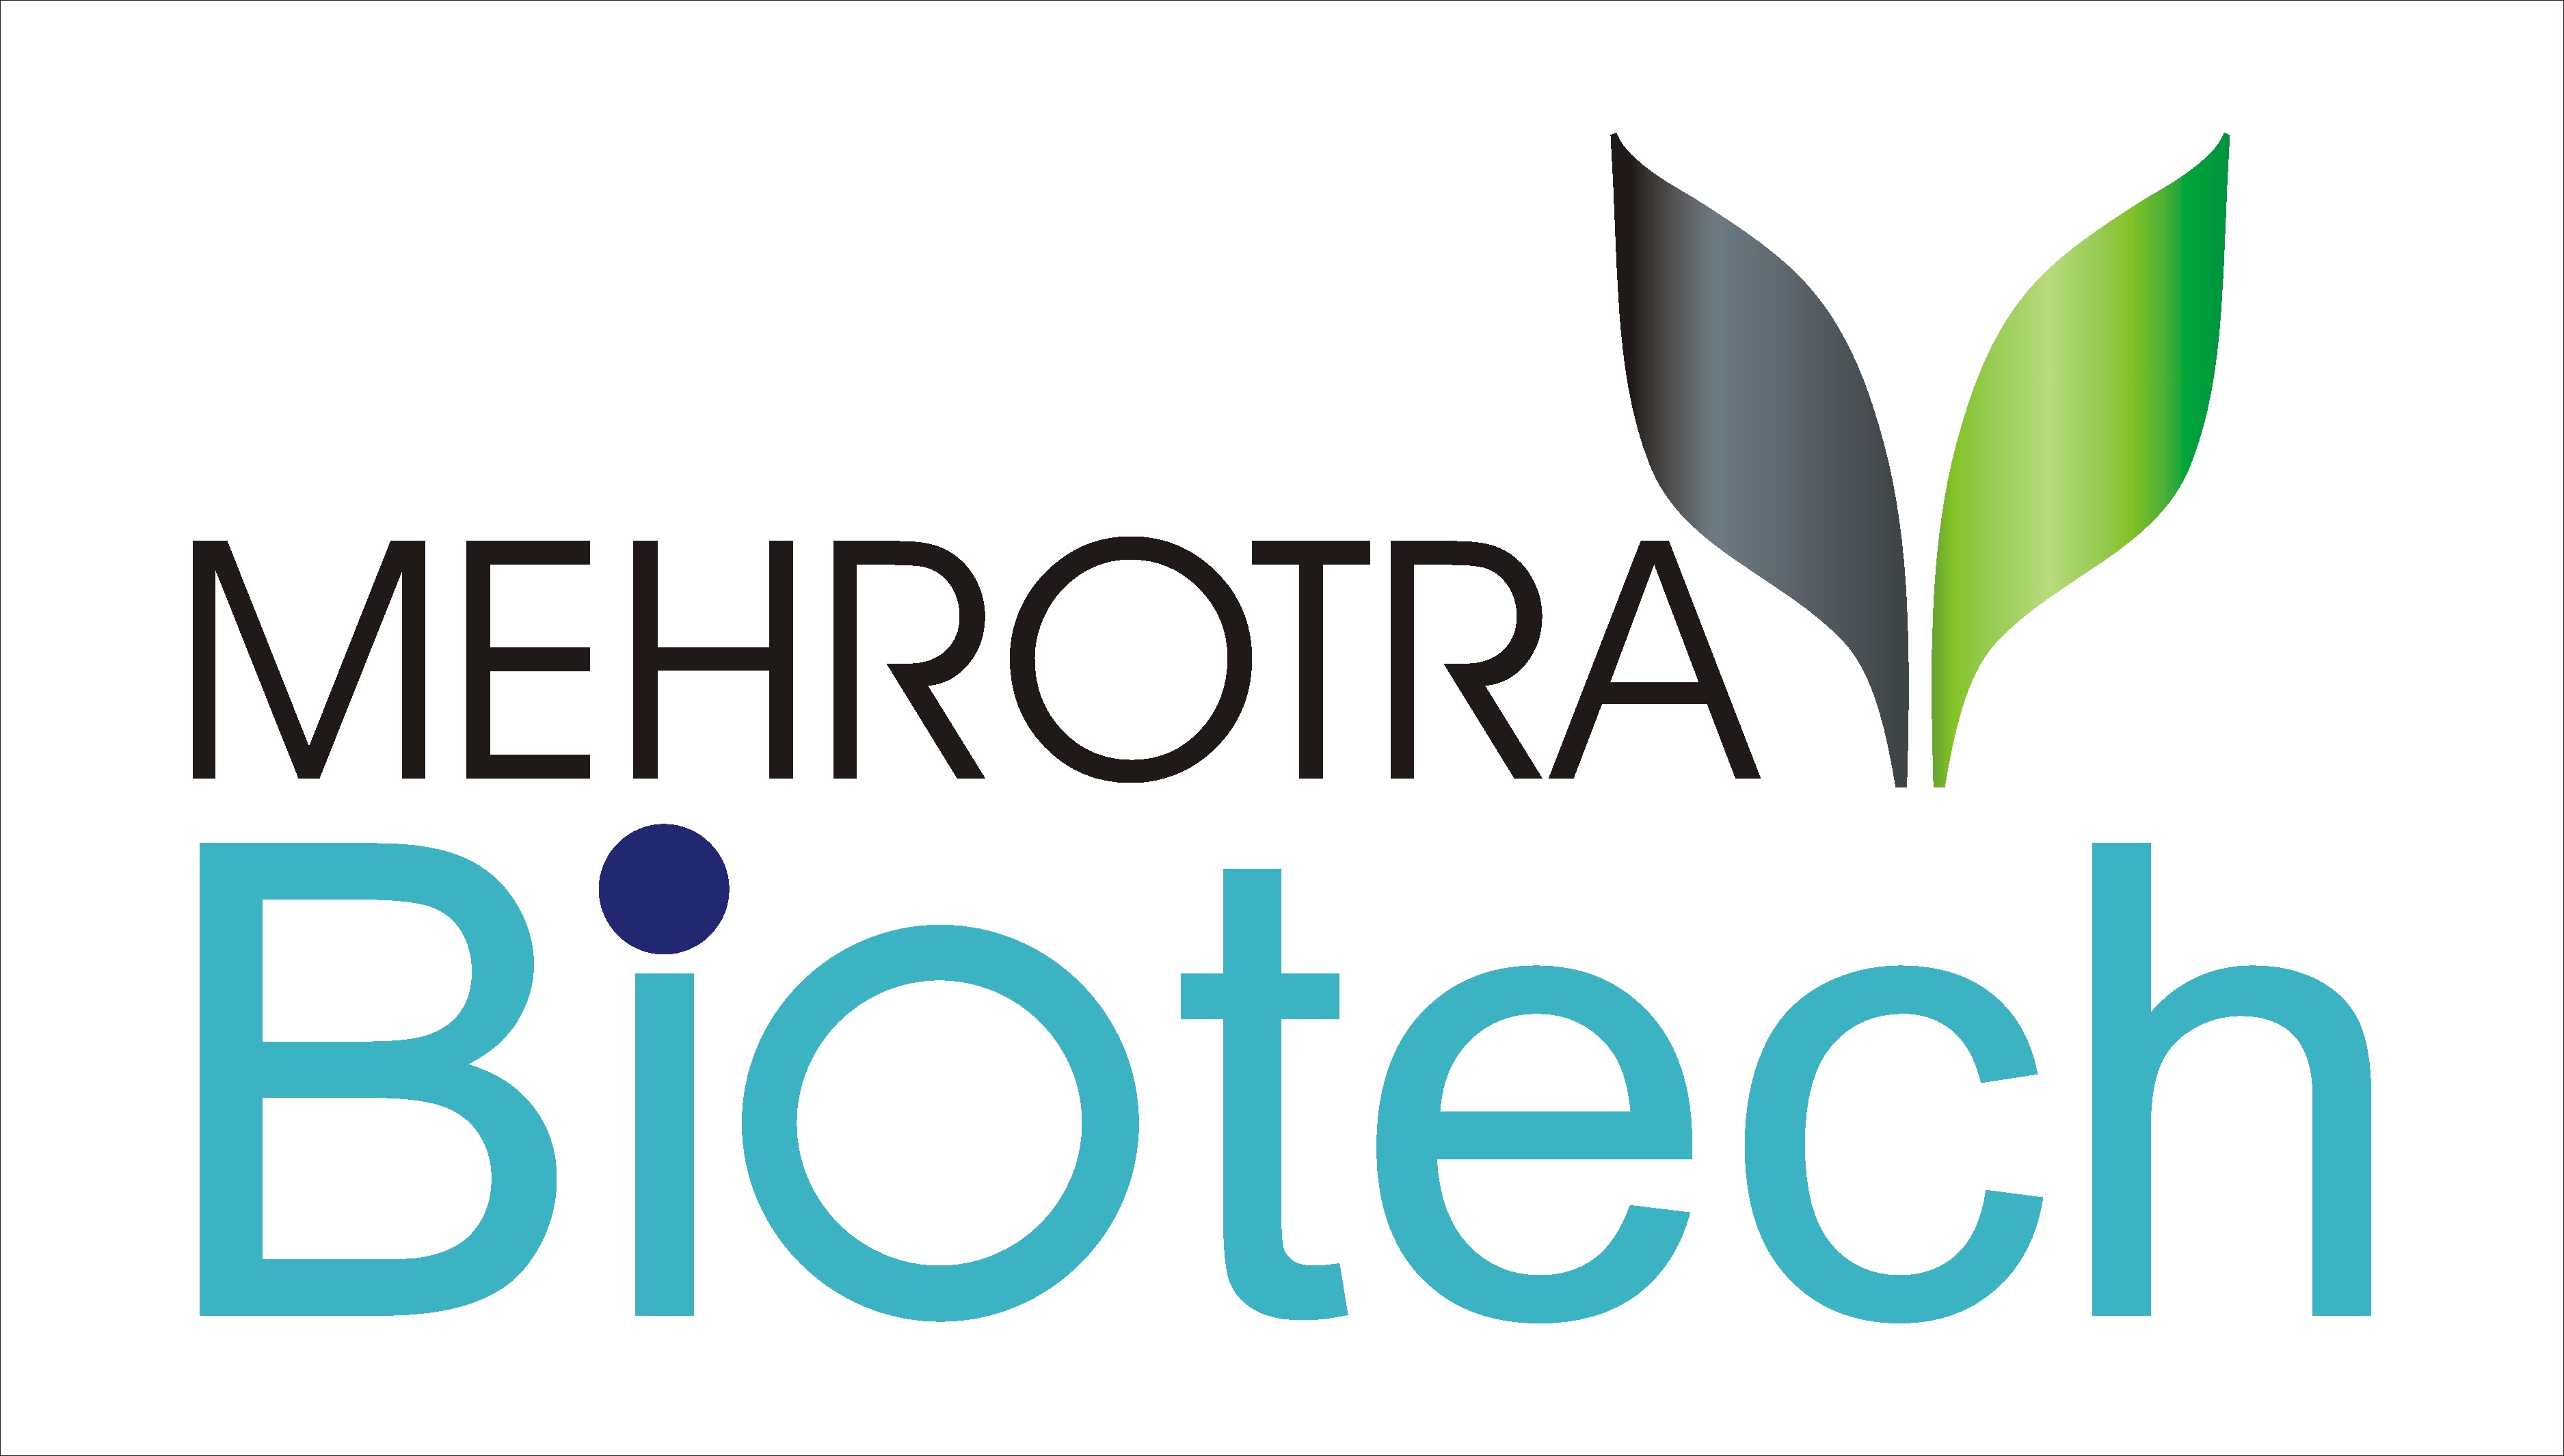 Mehrotra Biotech Pvt. Ltd.